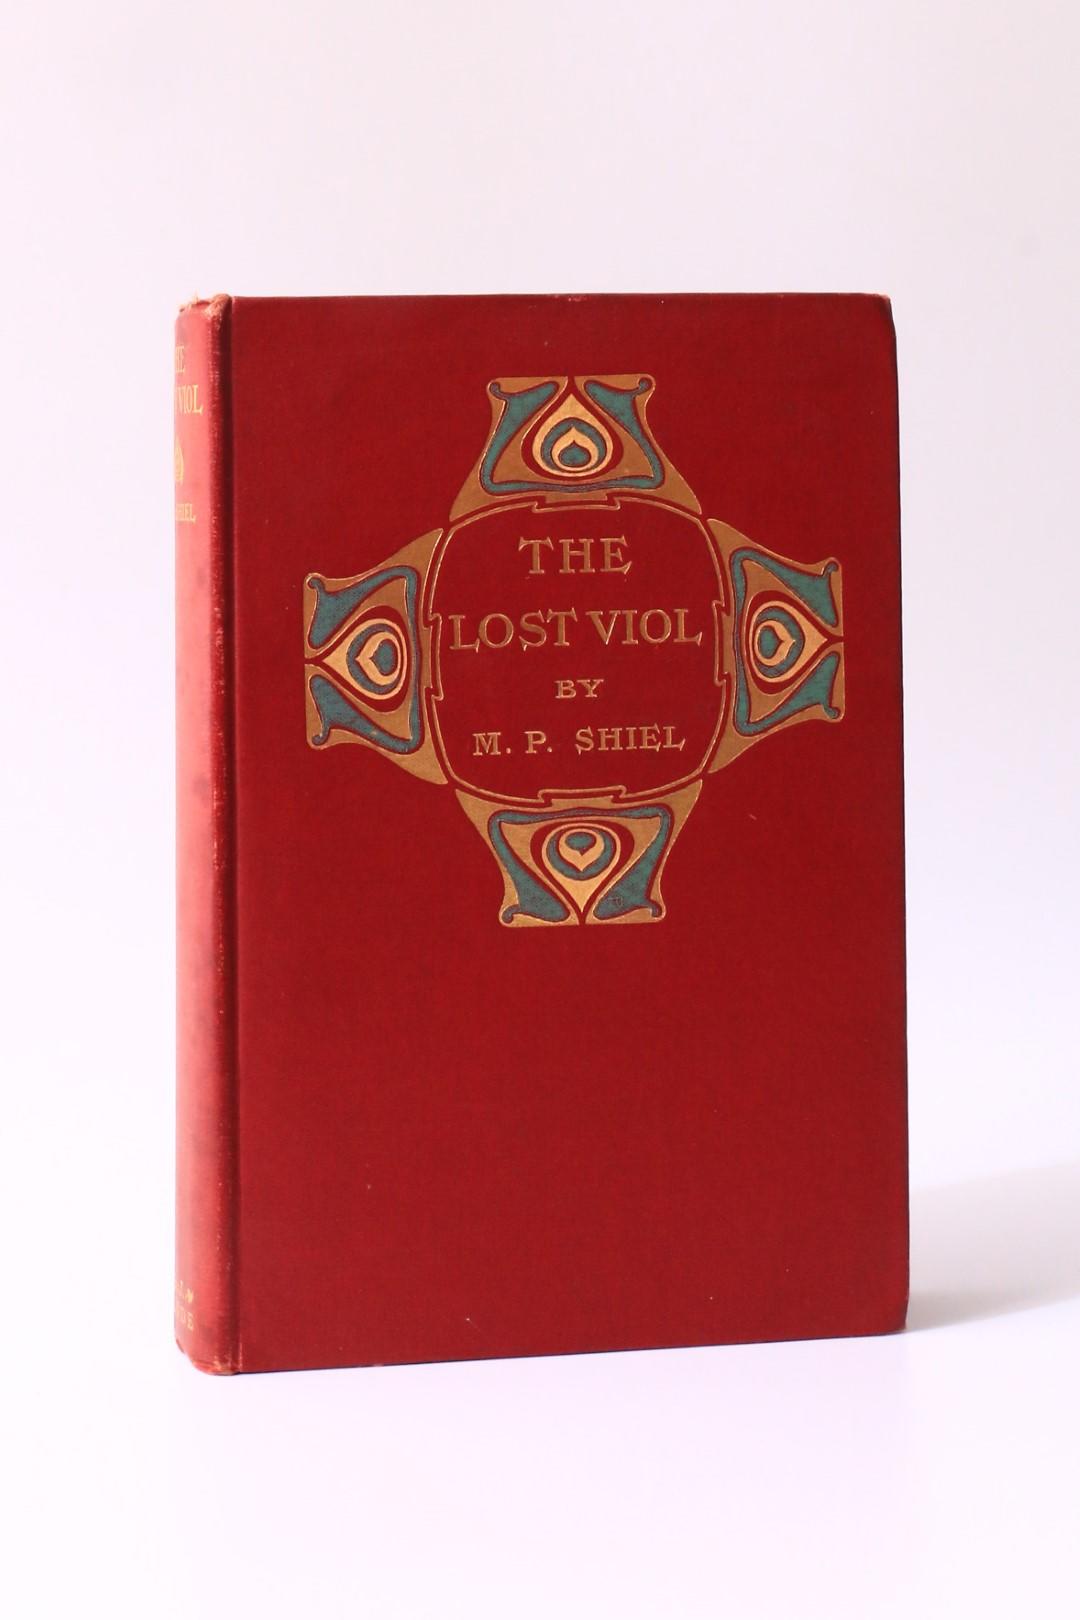 M.P. Shiel - The Lost Viol - E.J. Clode, 1905, First Edition.